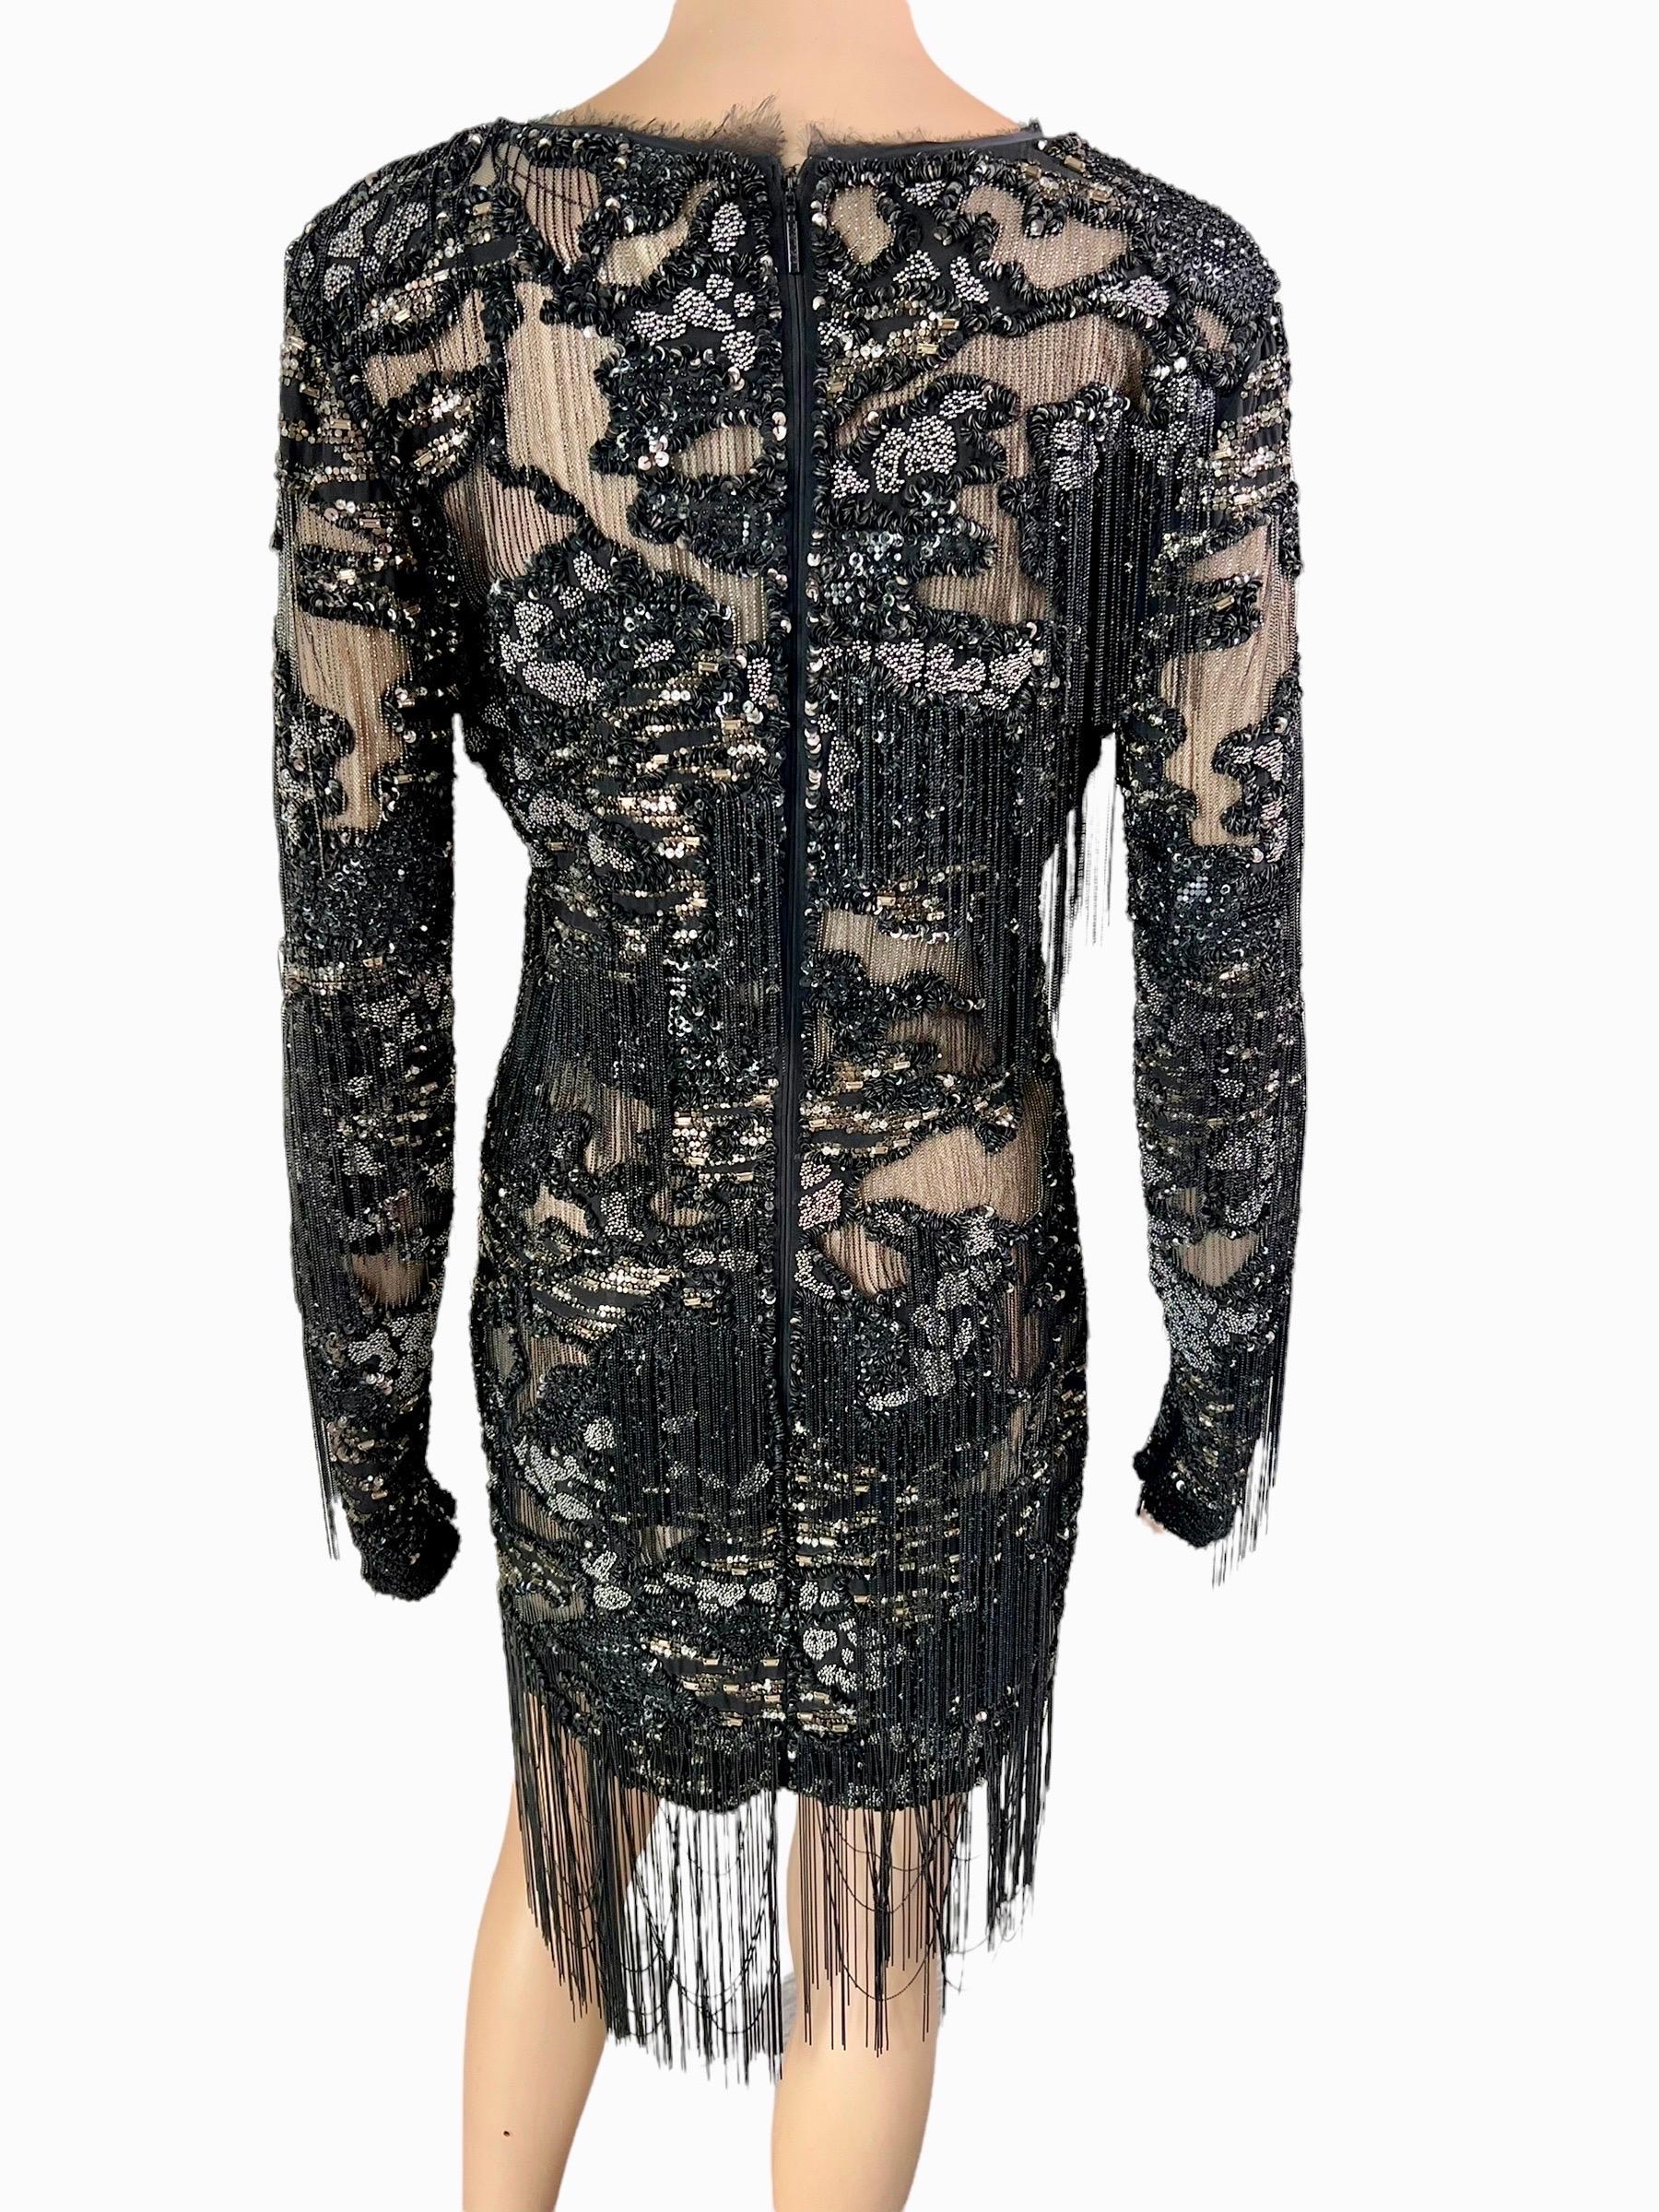 Roberto Cavalli S/S 2016 Runway Embellished Chain Sheer Black Mini Evening Dress For Sale 2